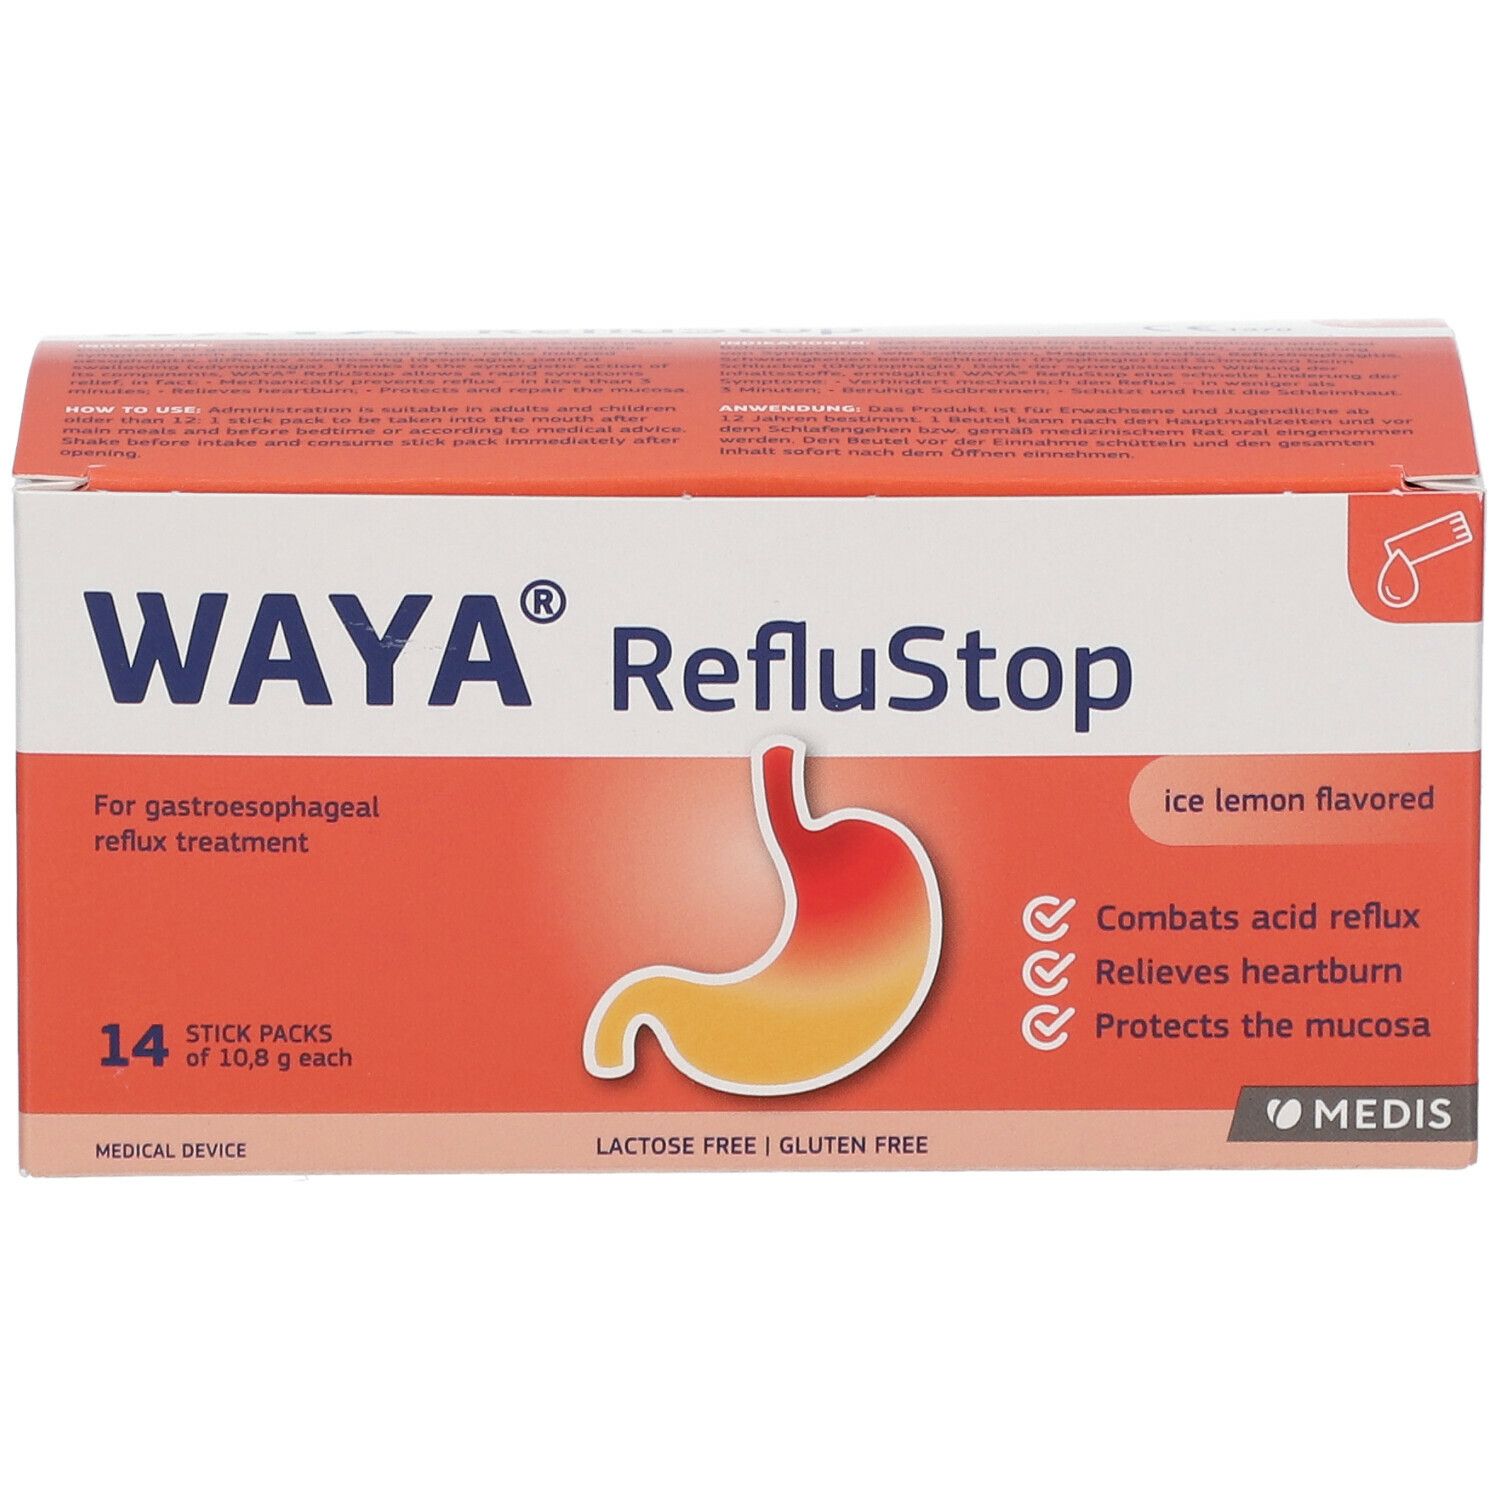 WAYA® RefluStop